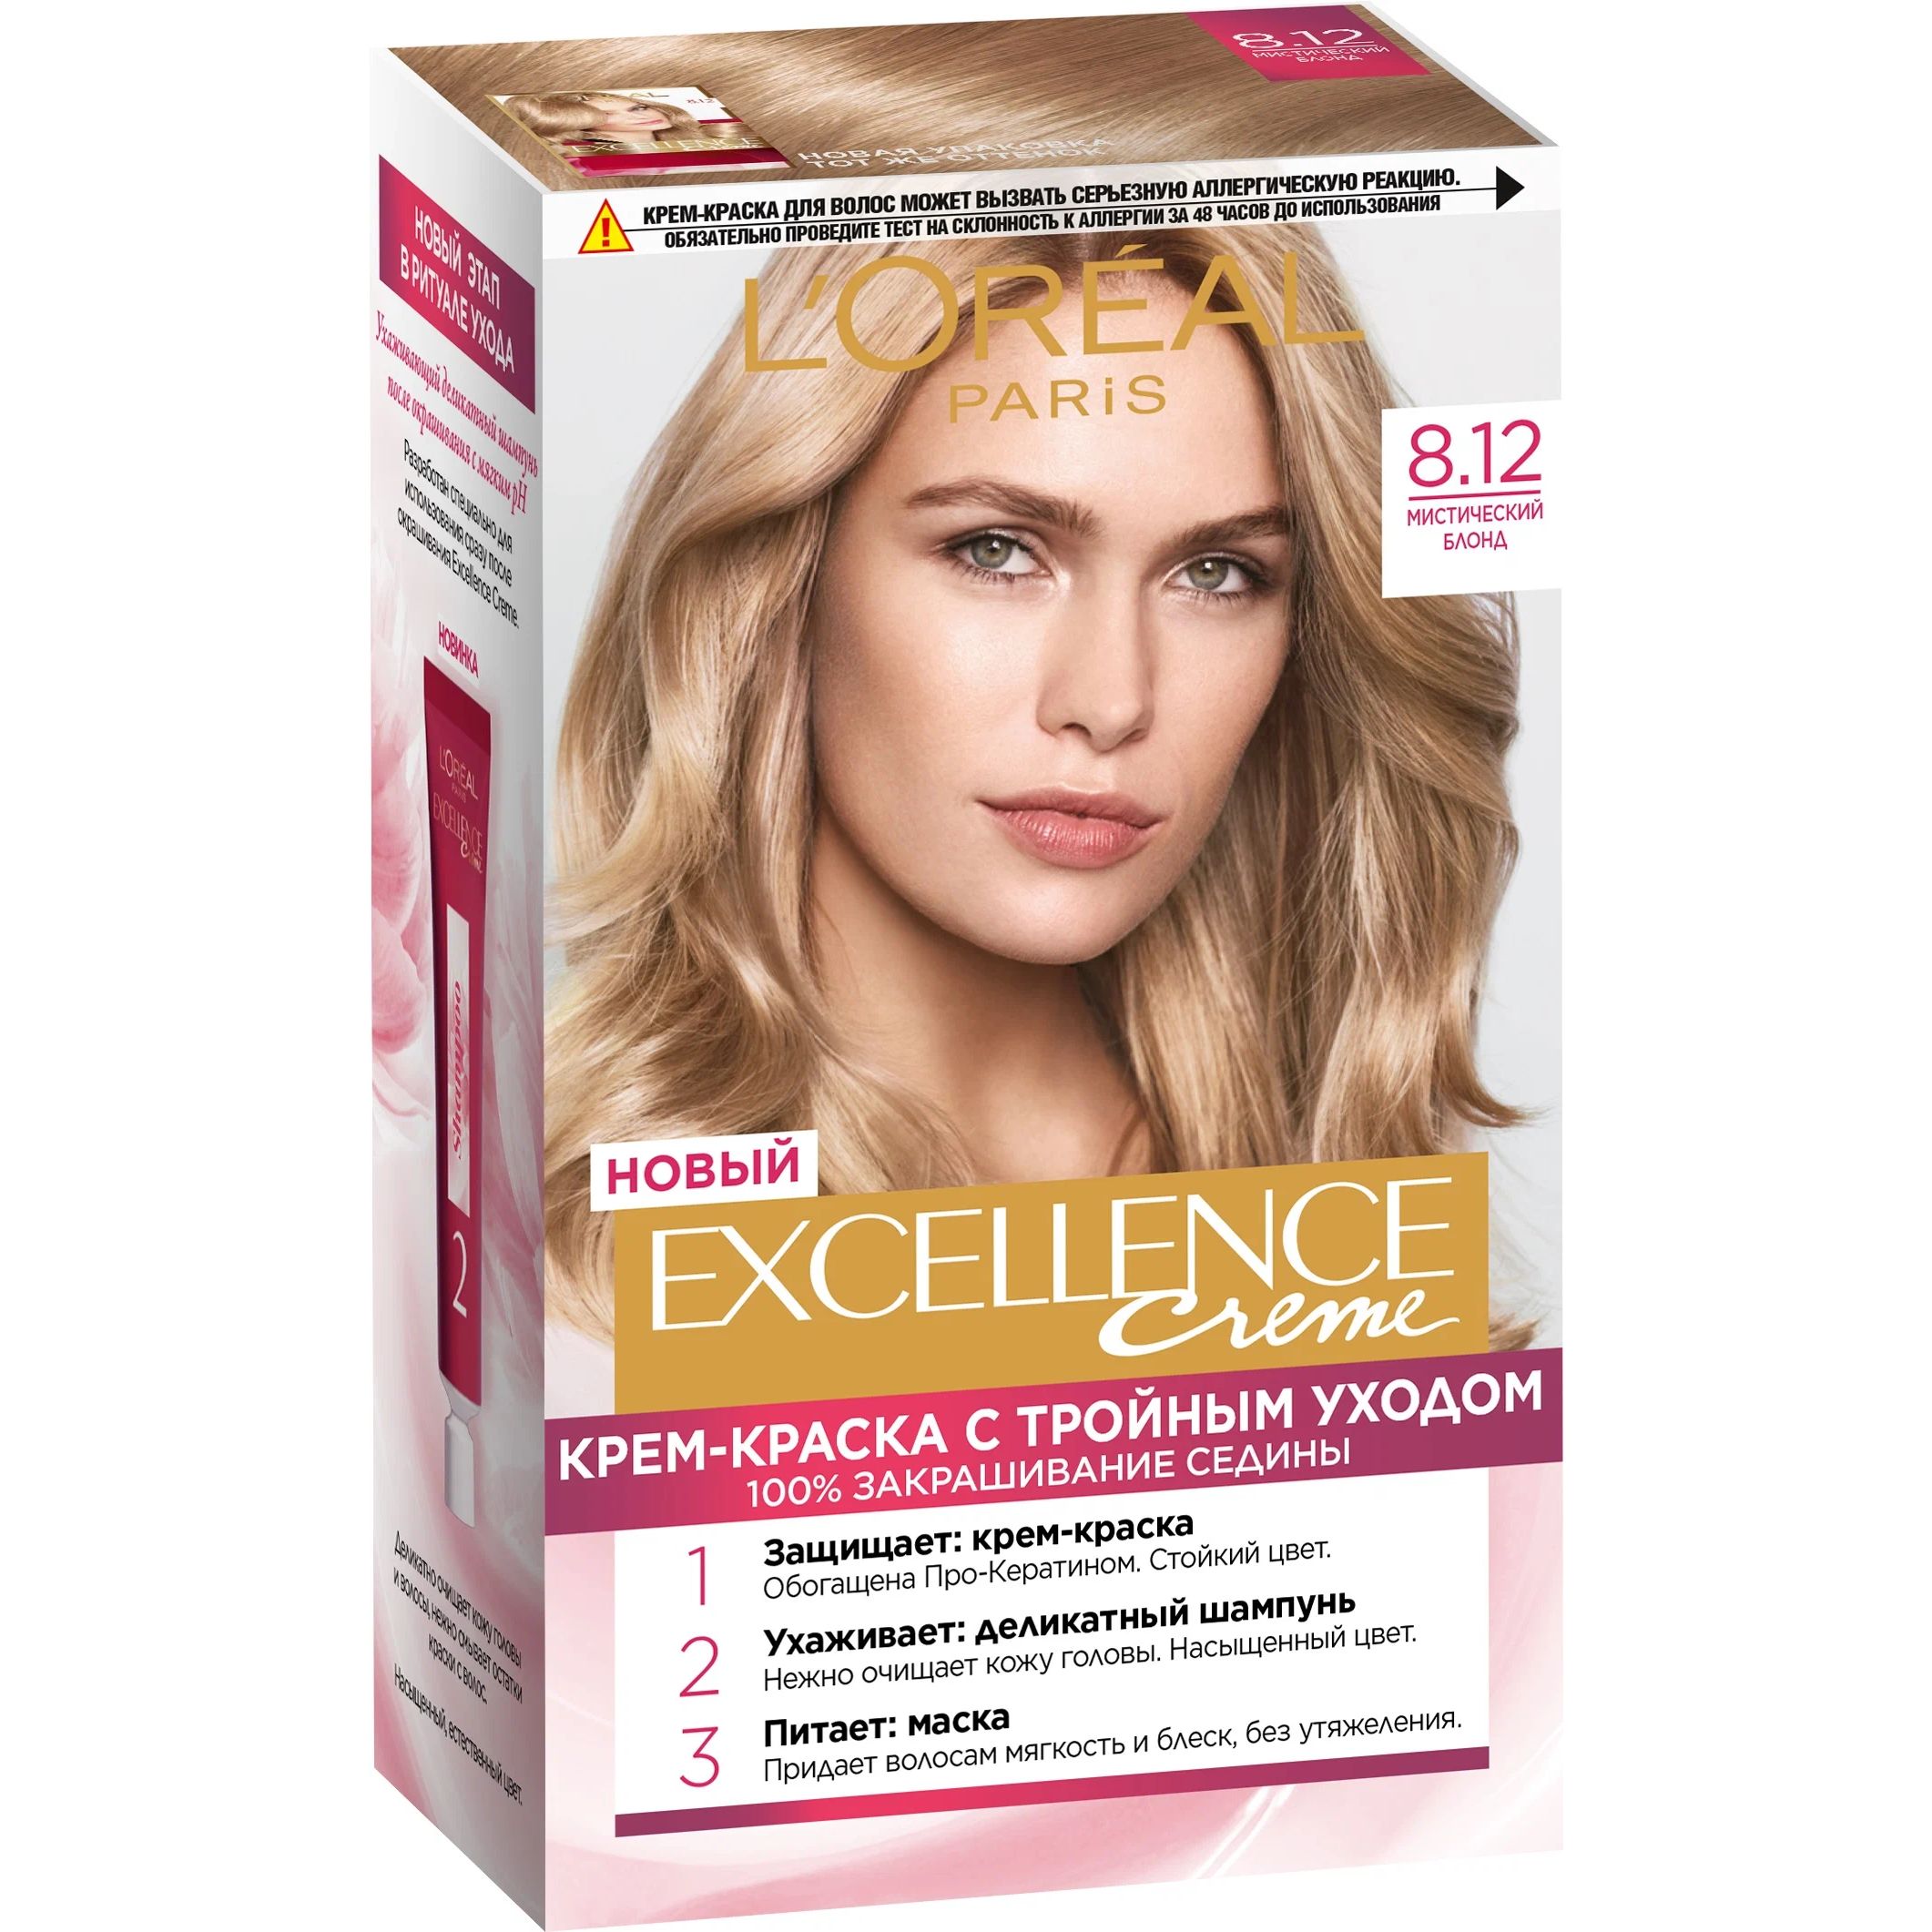 Крем-краска для волос L'Oreal Paris Excellence, 8.12 мистический блонд, 176 мл the excellence dividend